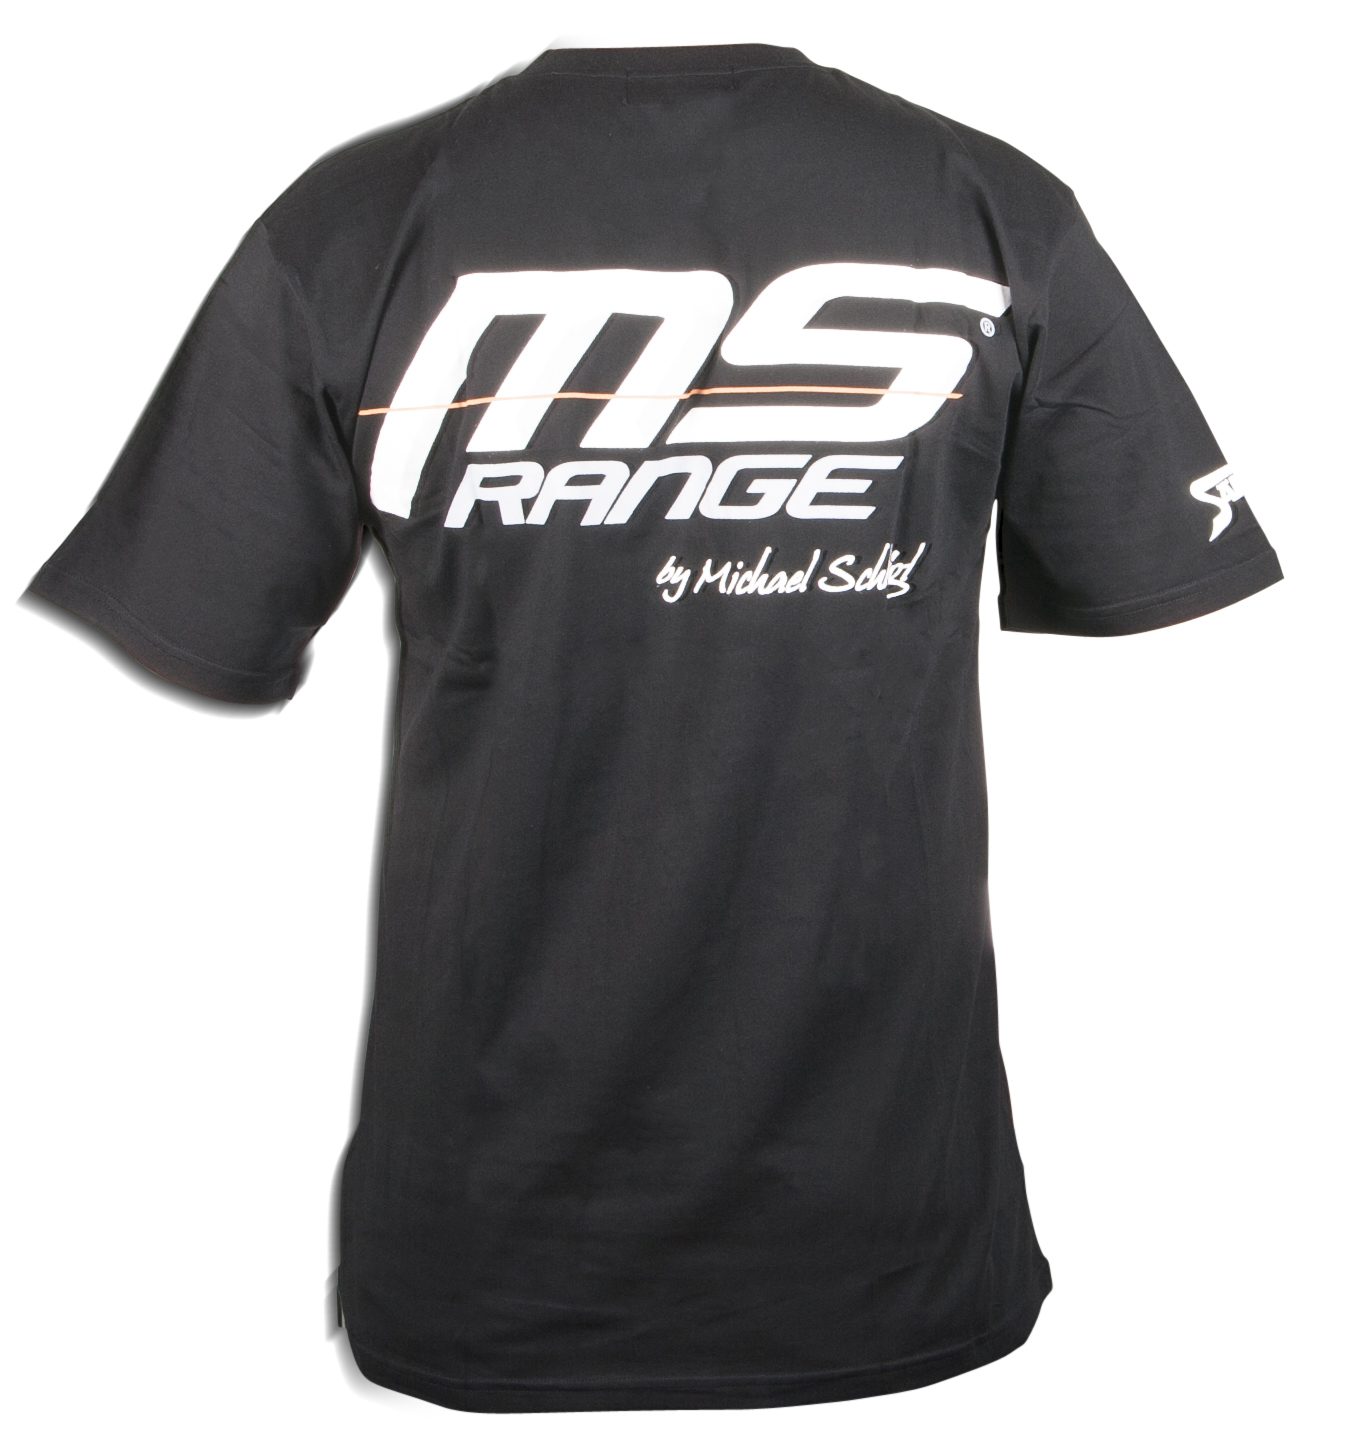 MS Range T-Shirt Old Edition